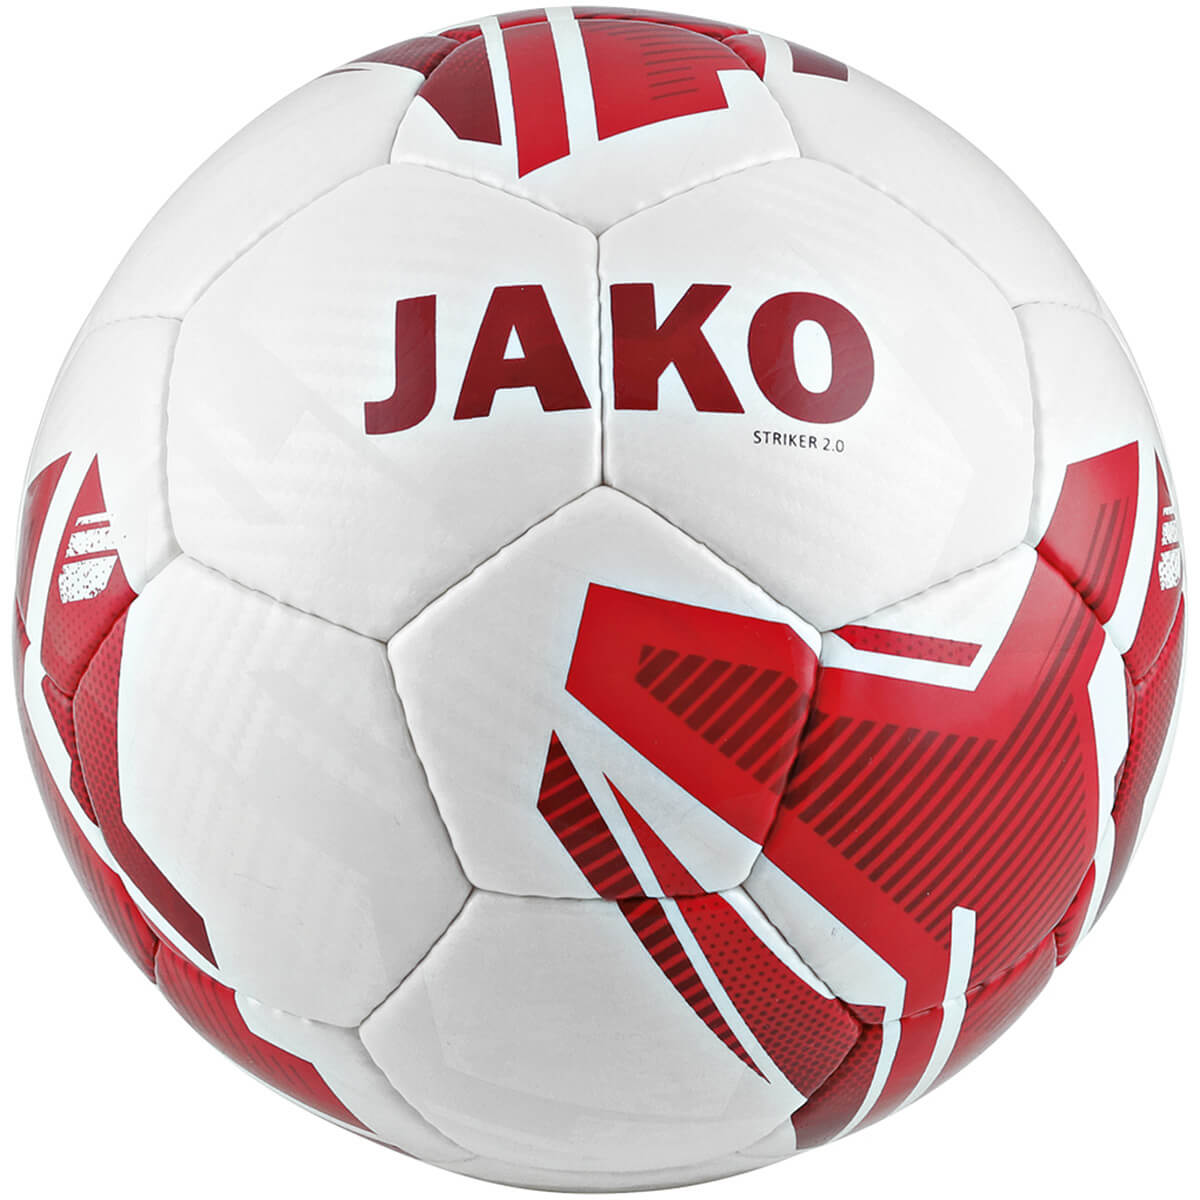 JAKO 2353-01 Training Ball Striker 2.0 White/Red